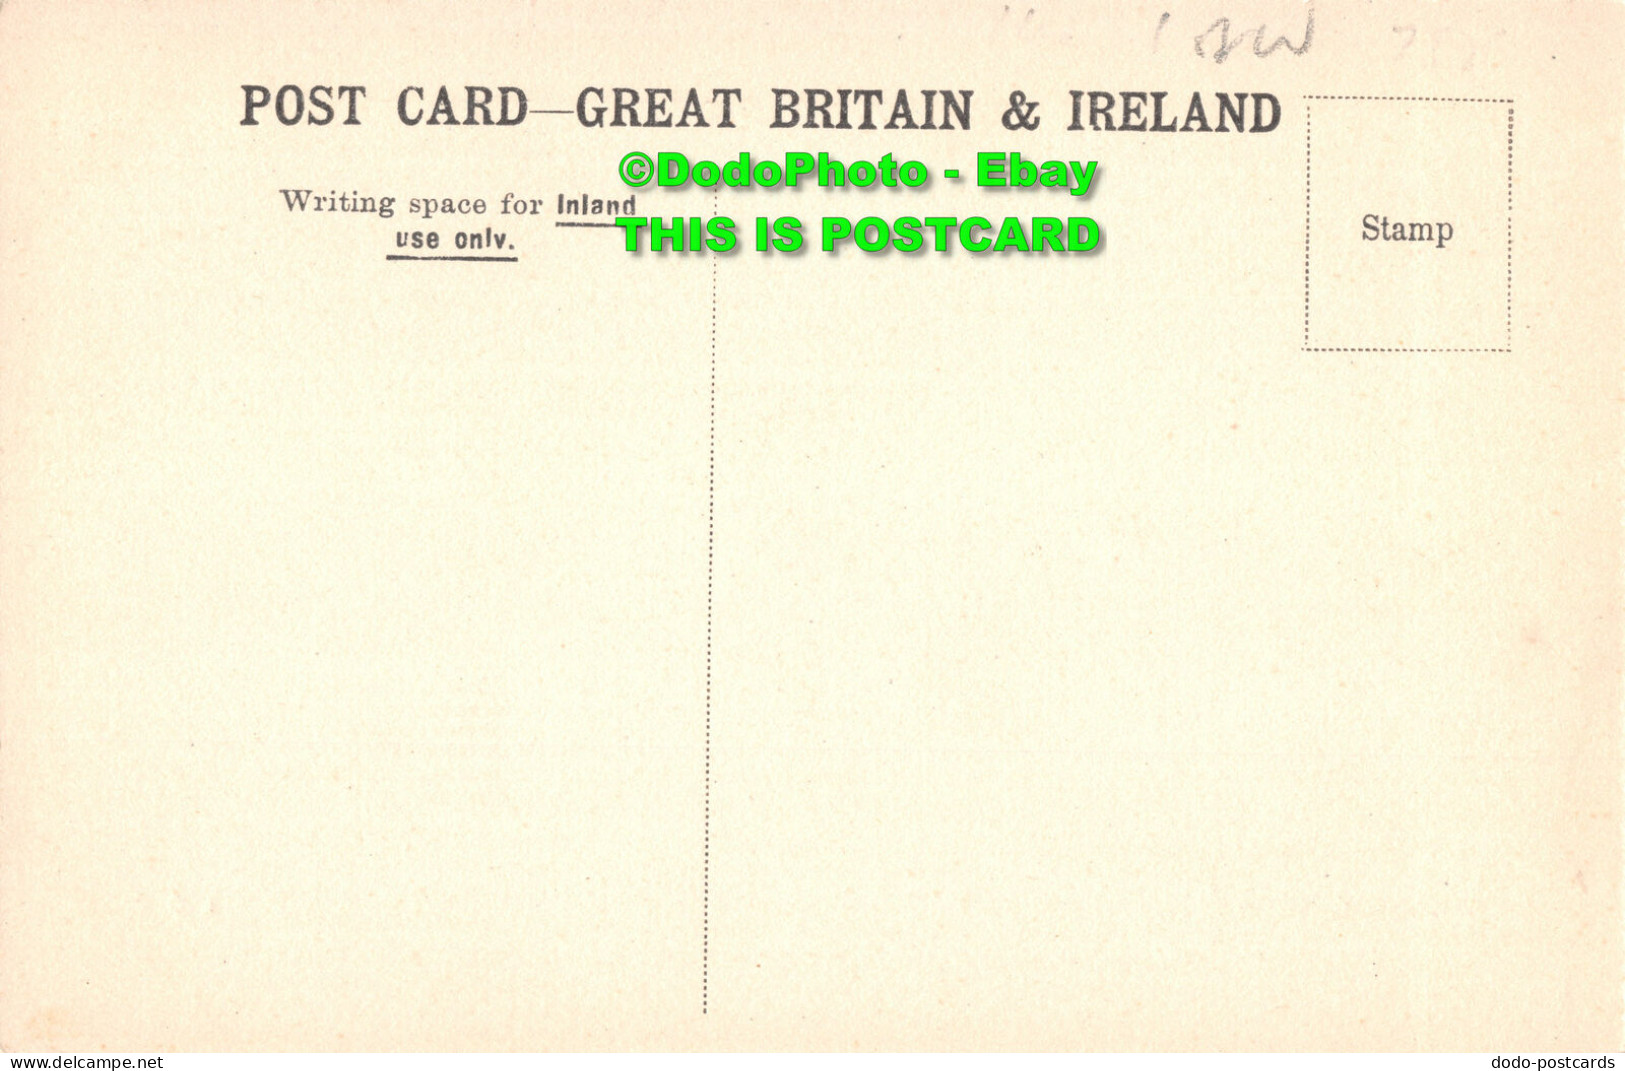 R417434 Sandown. I. O. W. Postcard - Monde